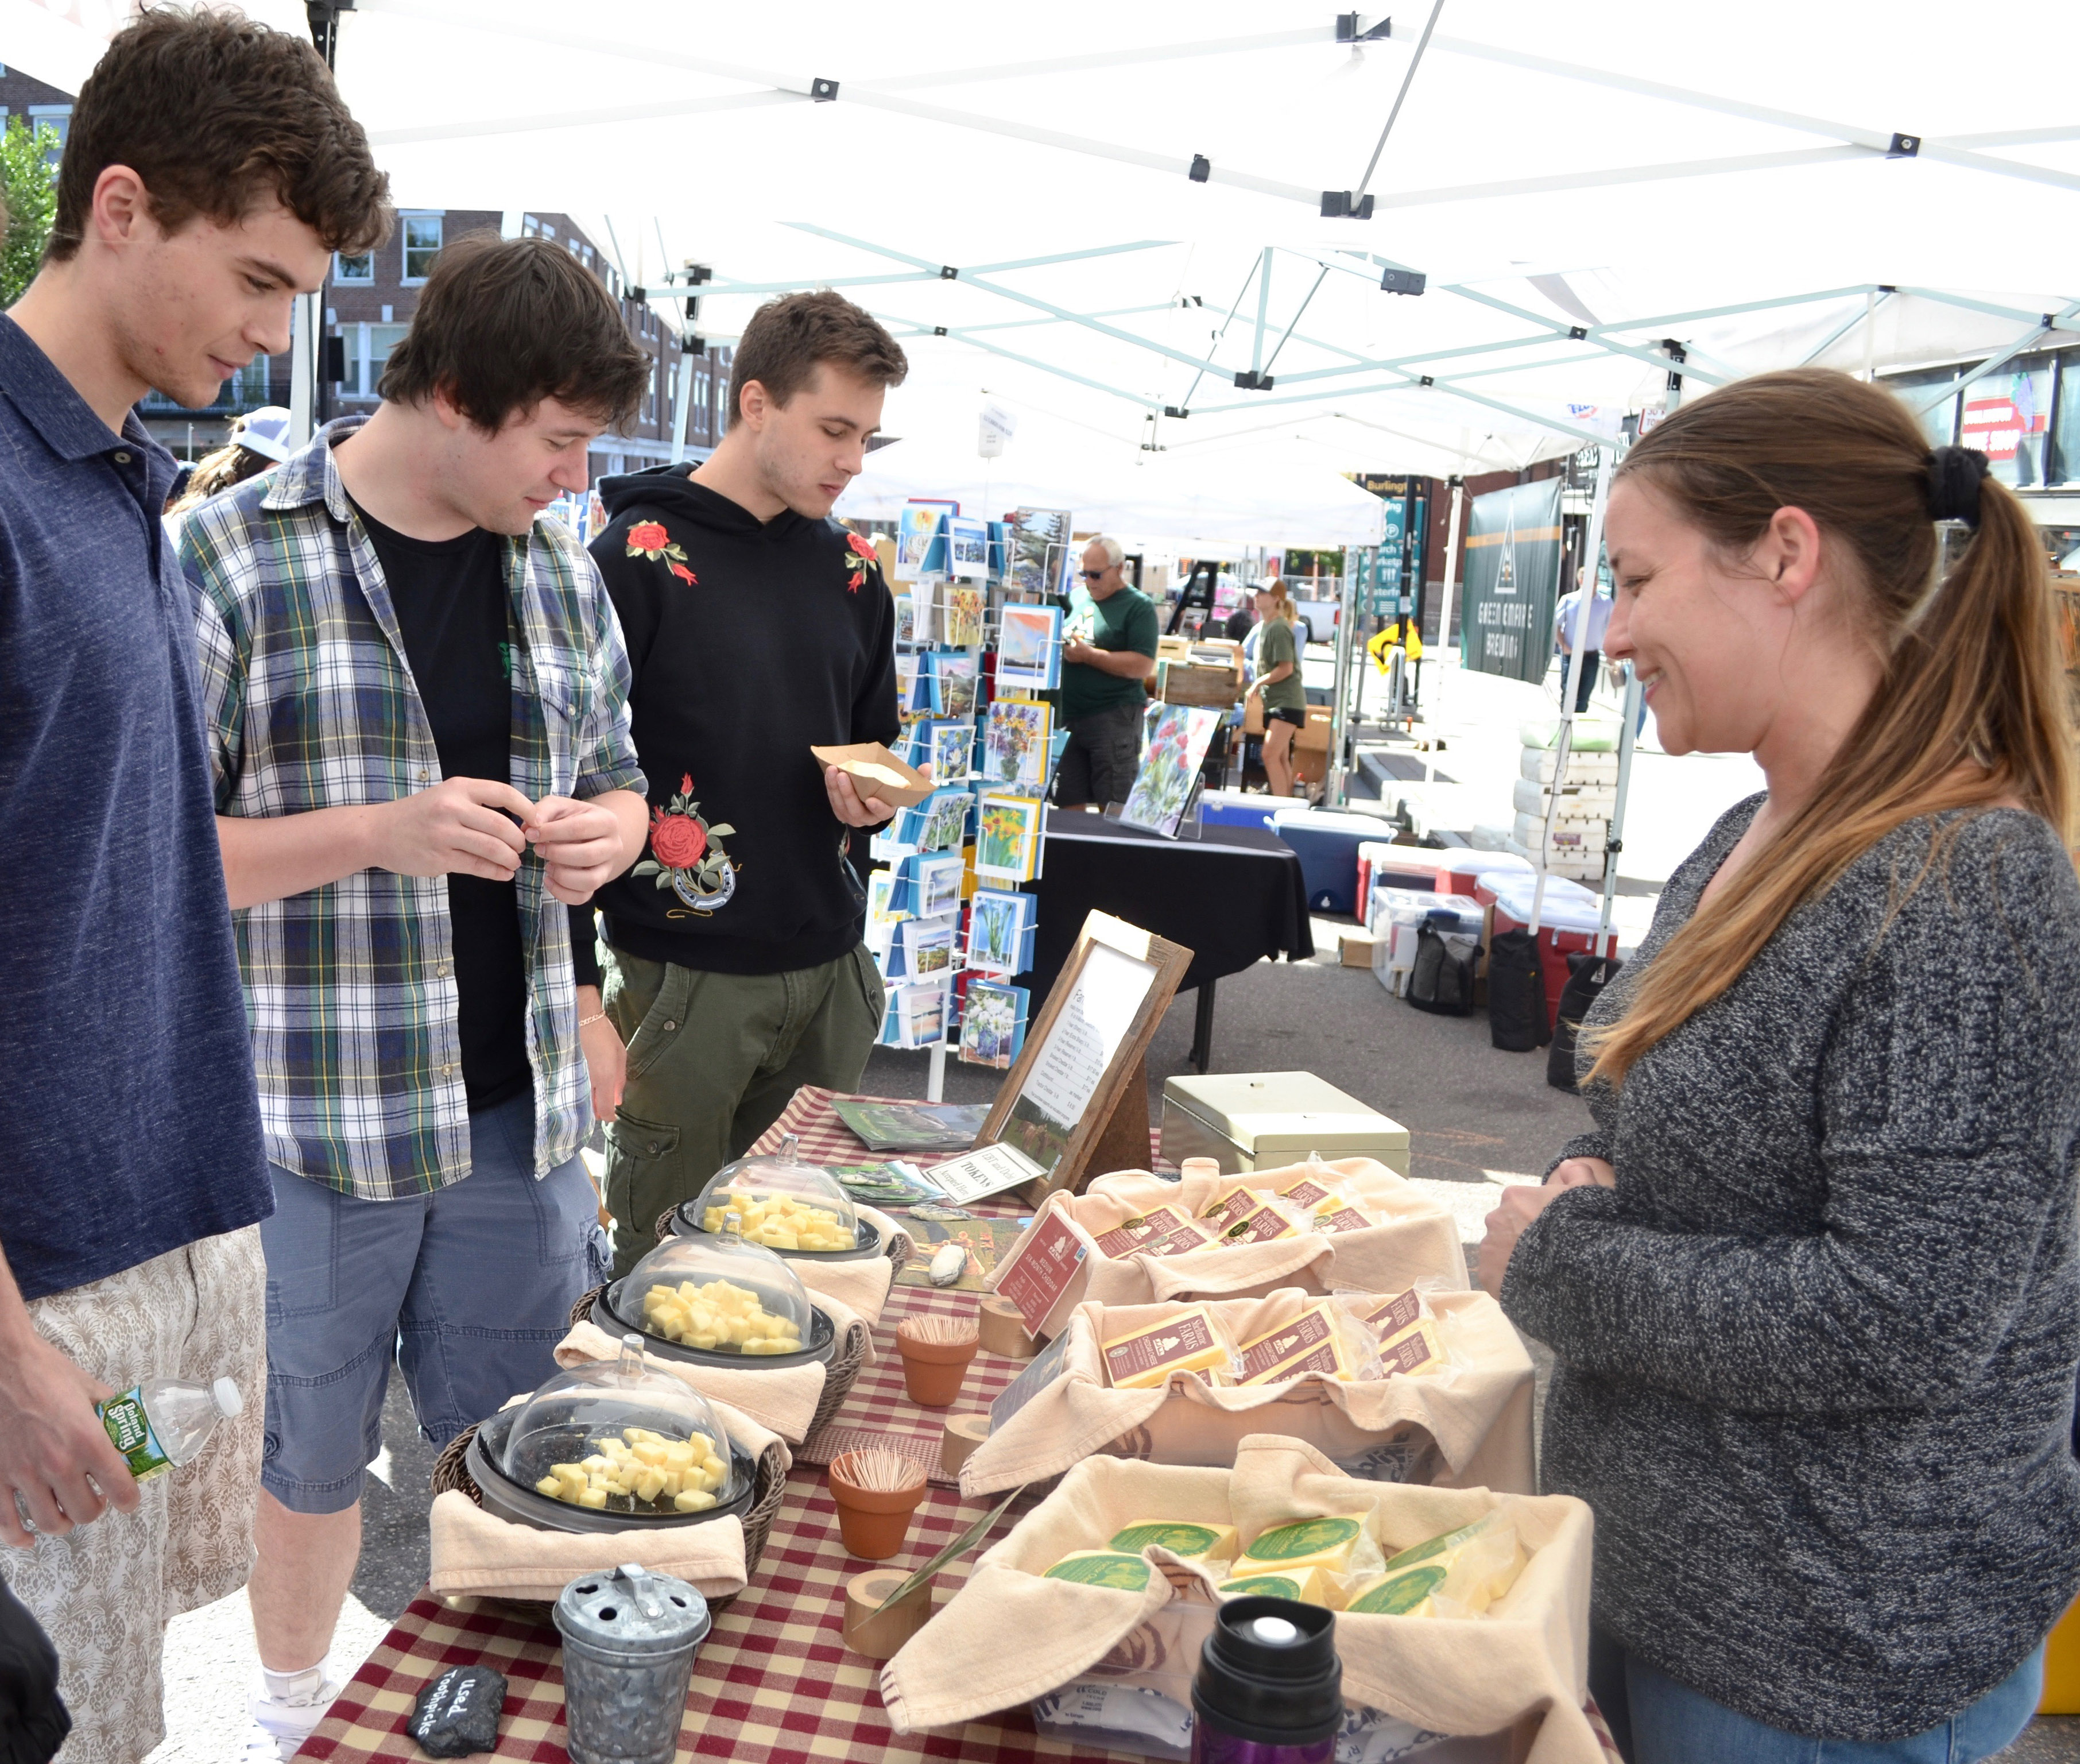 Students at the Burlington Famers Market